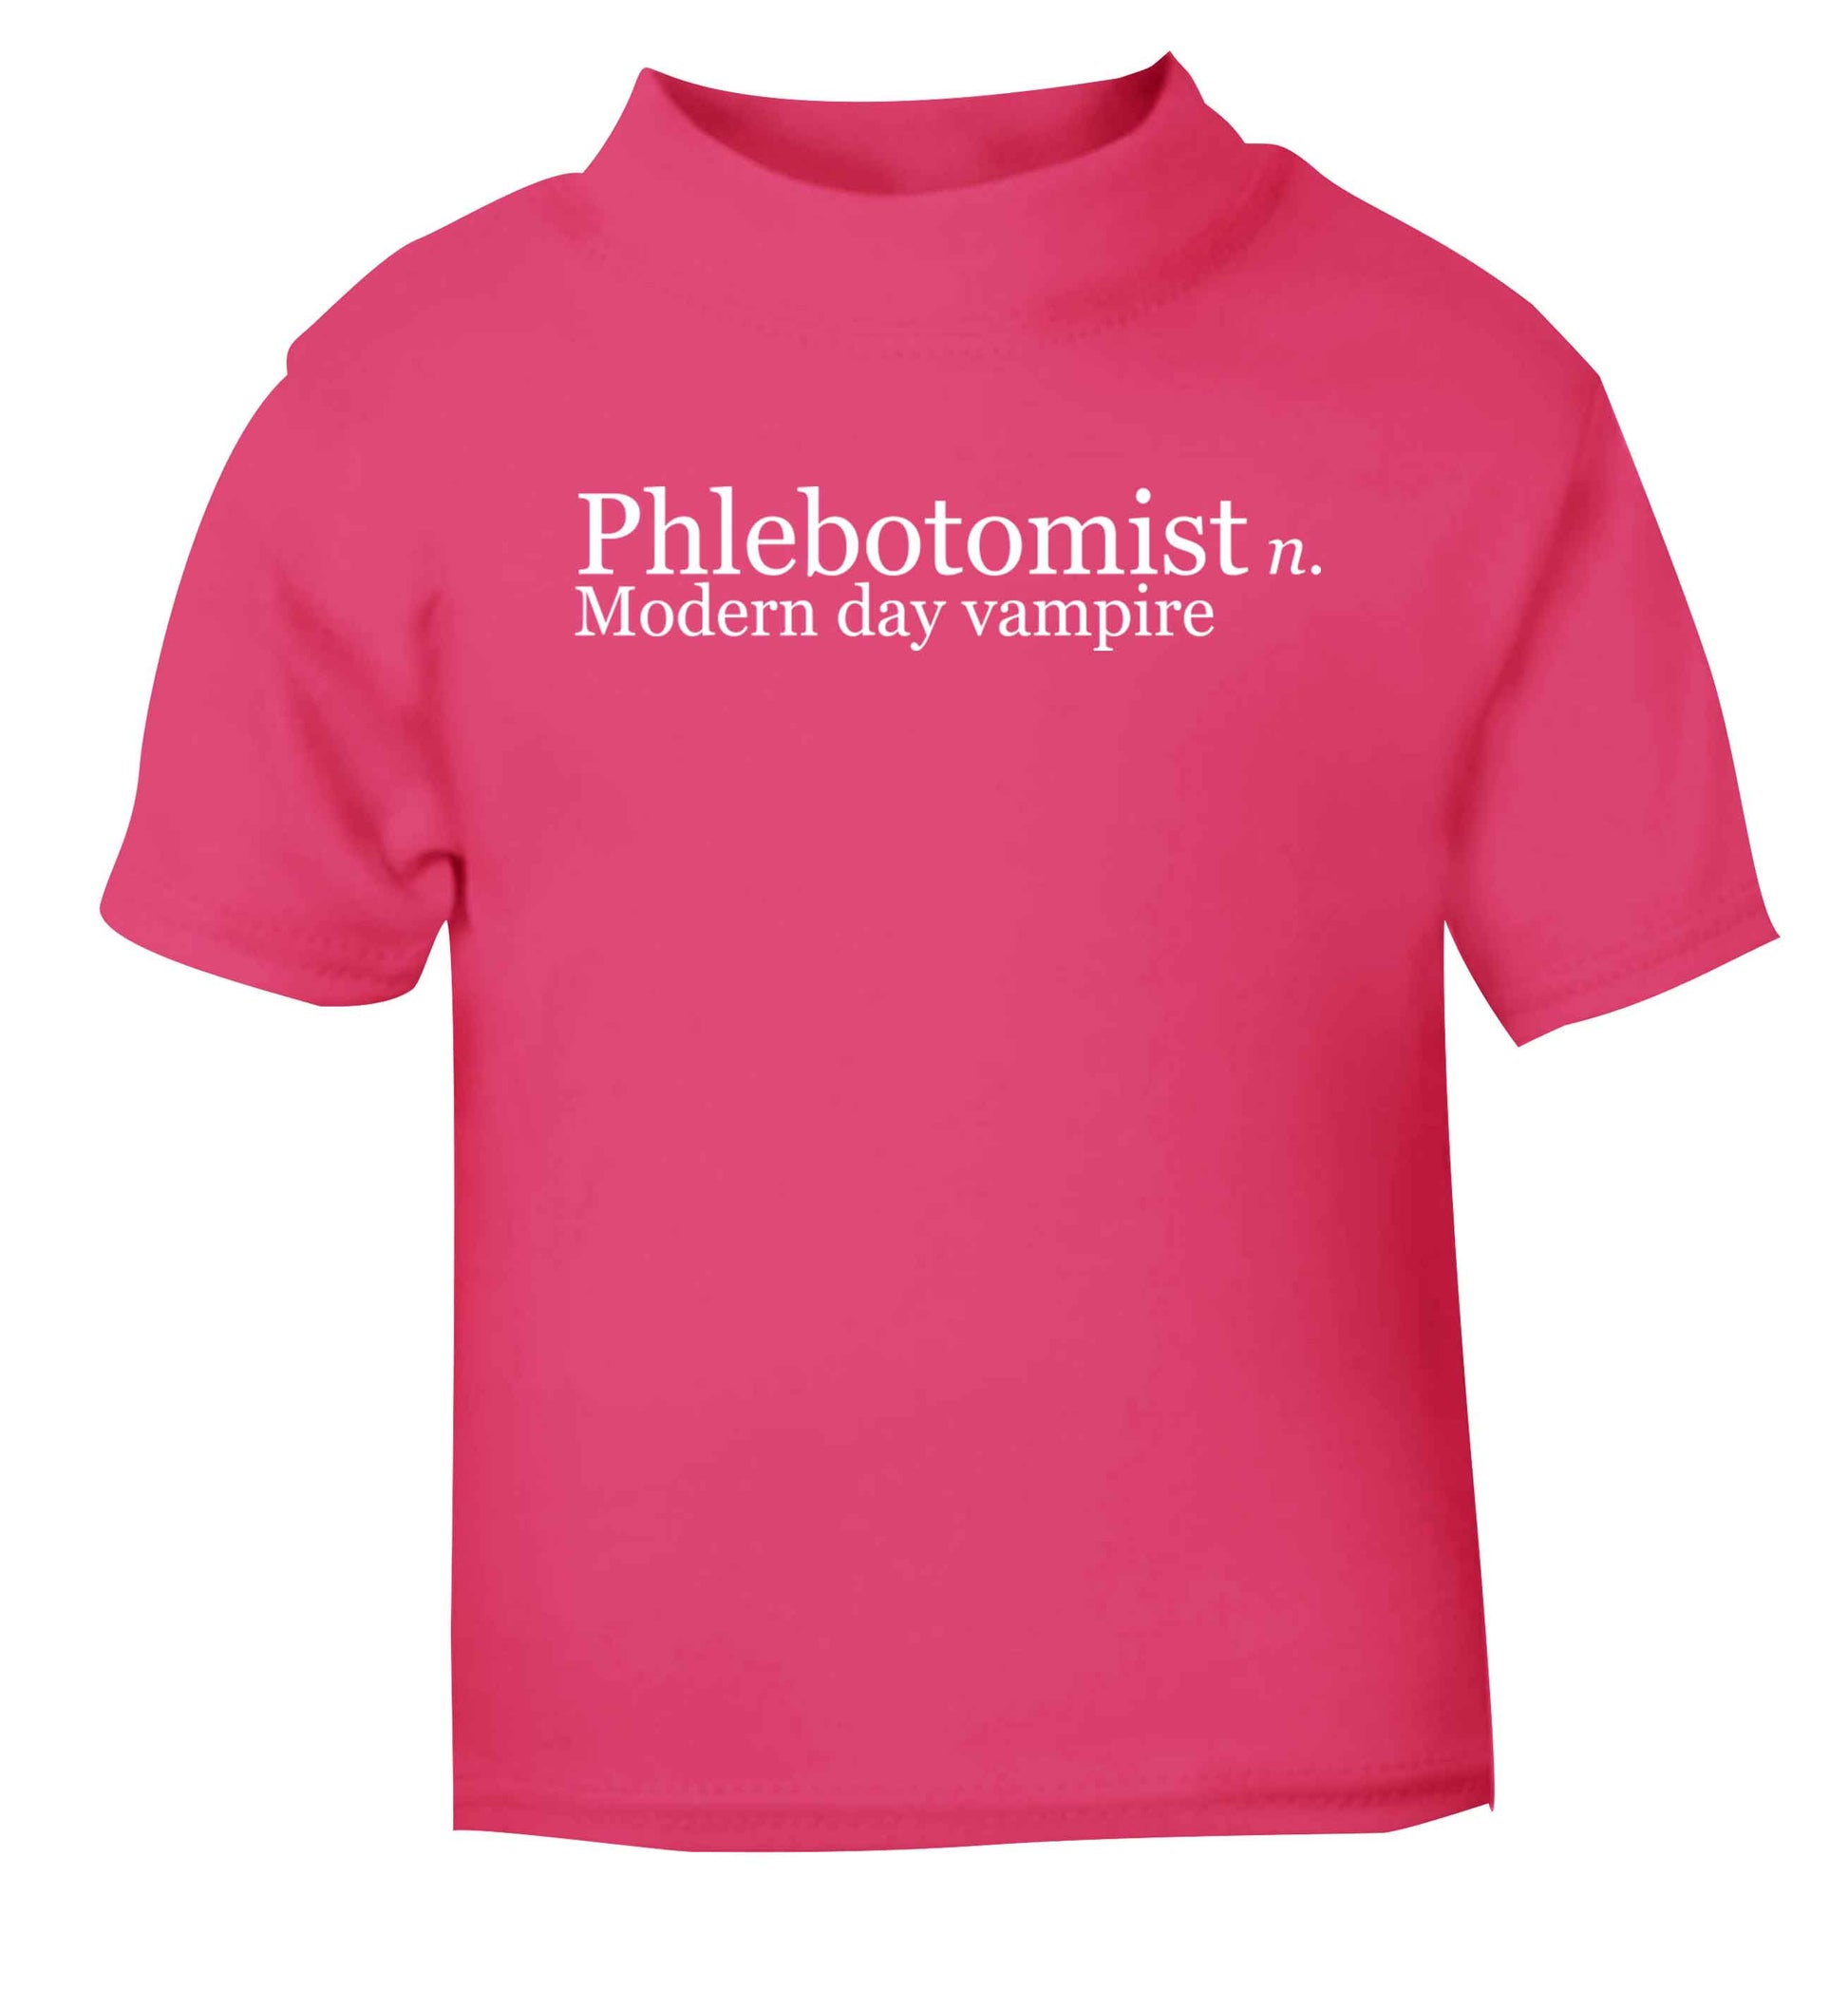 Phlebotomist - Modern day vampire pink baby toddler Tshirt 2 Years